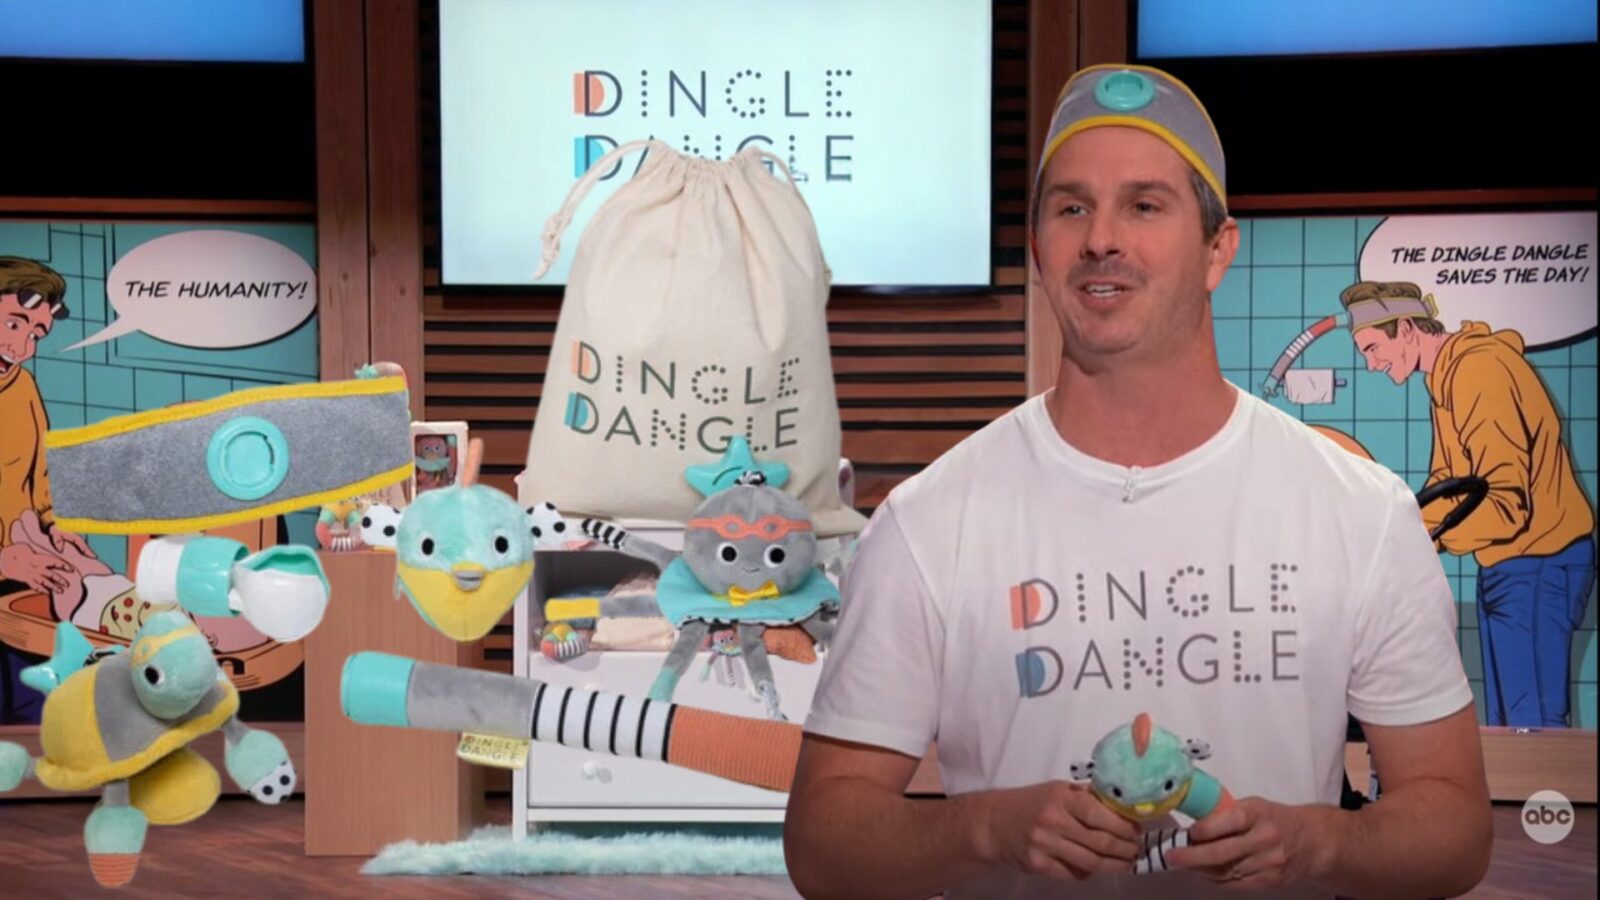 Dingle Dangle Net Worth Update (Before & After Shark Tank)